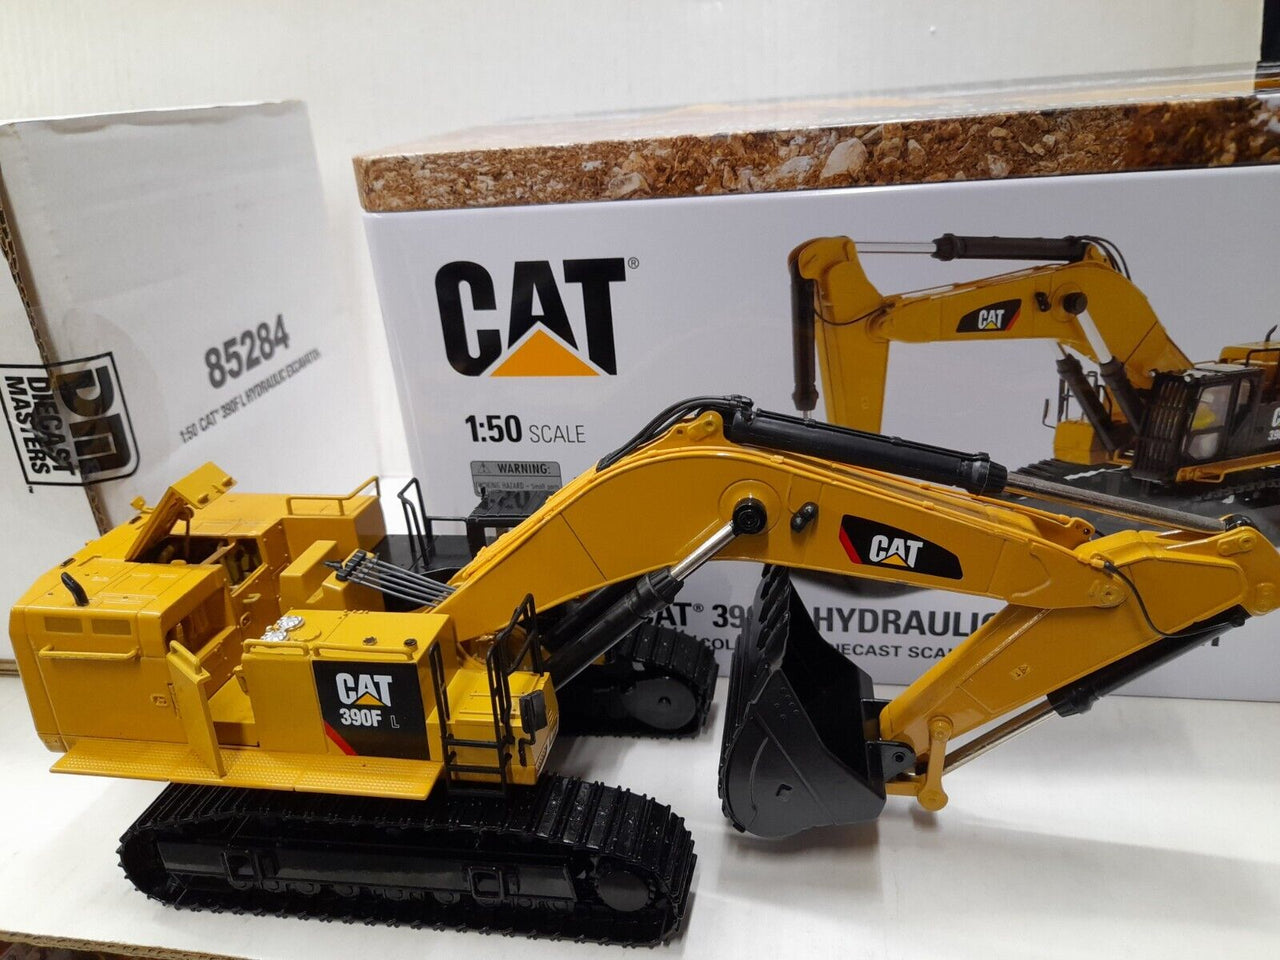 85284 Caterpillar 390F L Hydraulic Excavator Scale 1:50